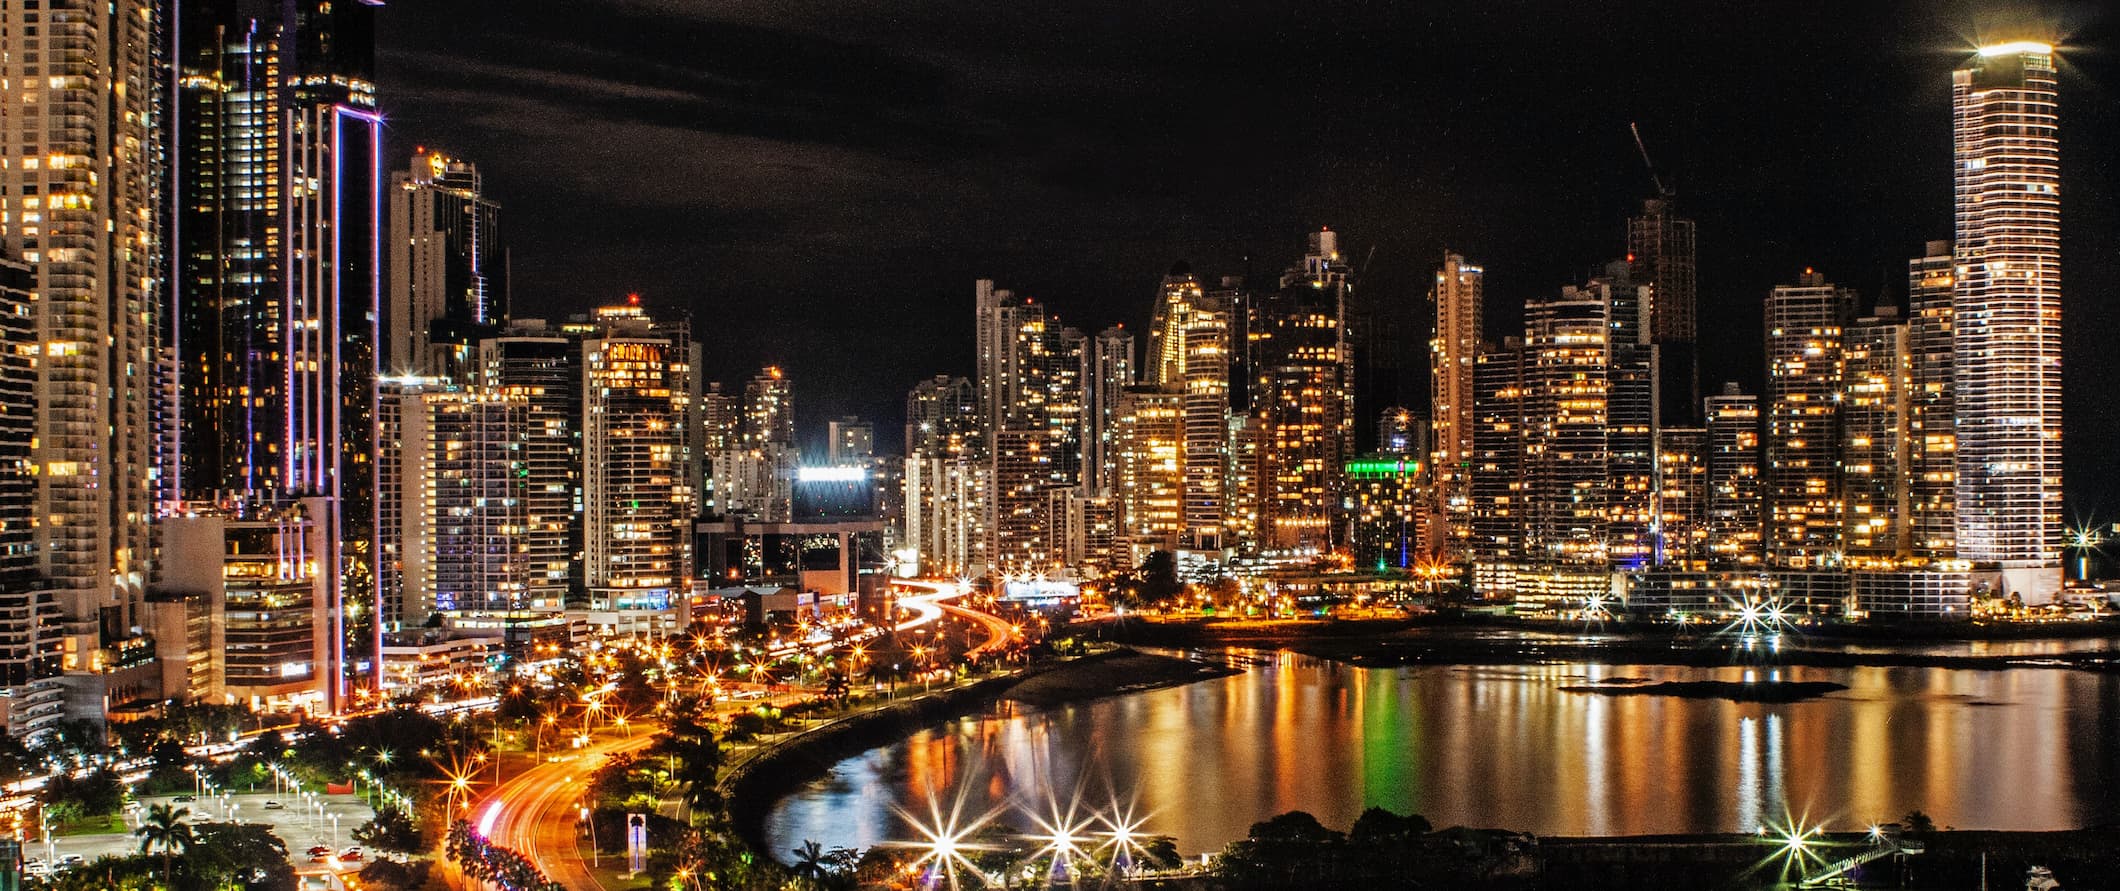 traffic and city skyline views in Panama City